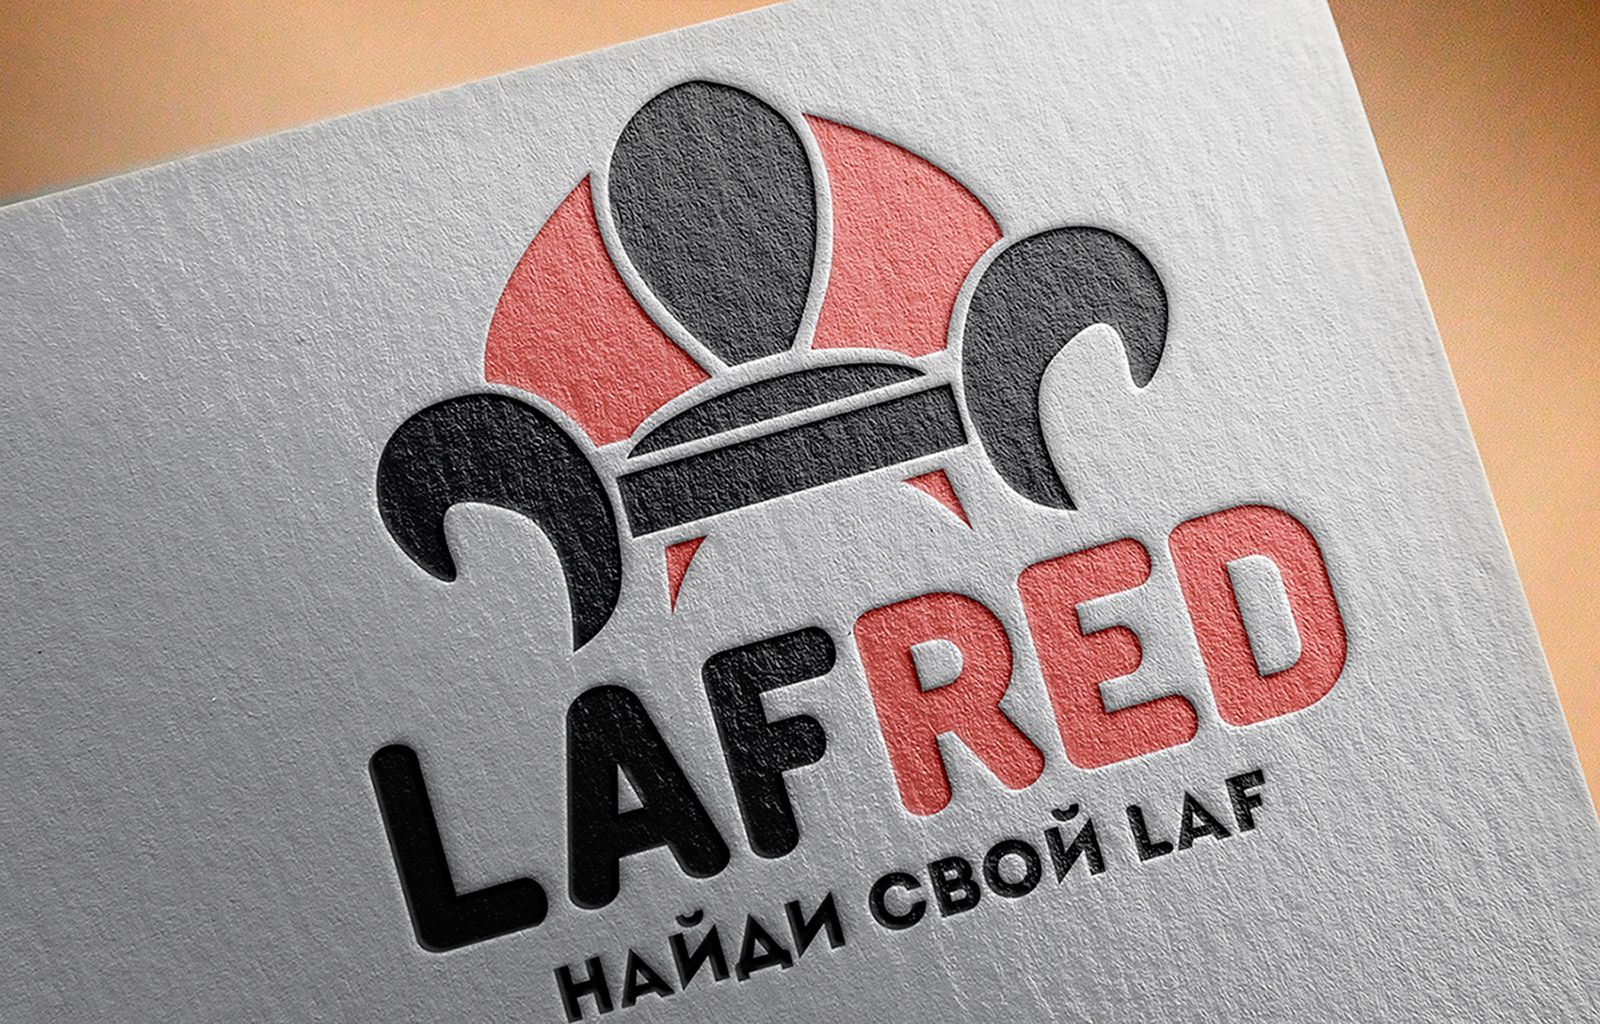 Логотип для Lafred - дизайнер Wolf